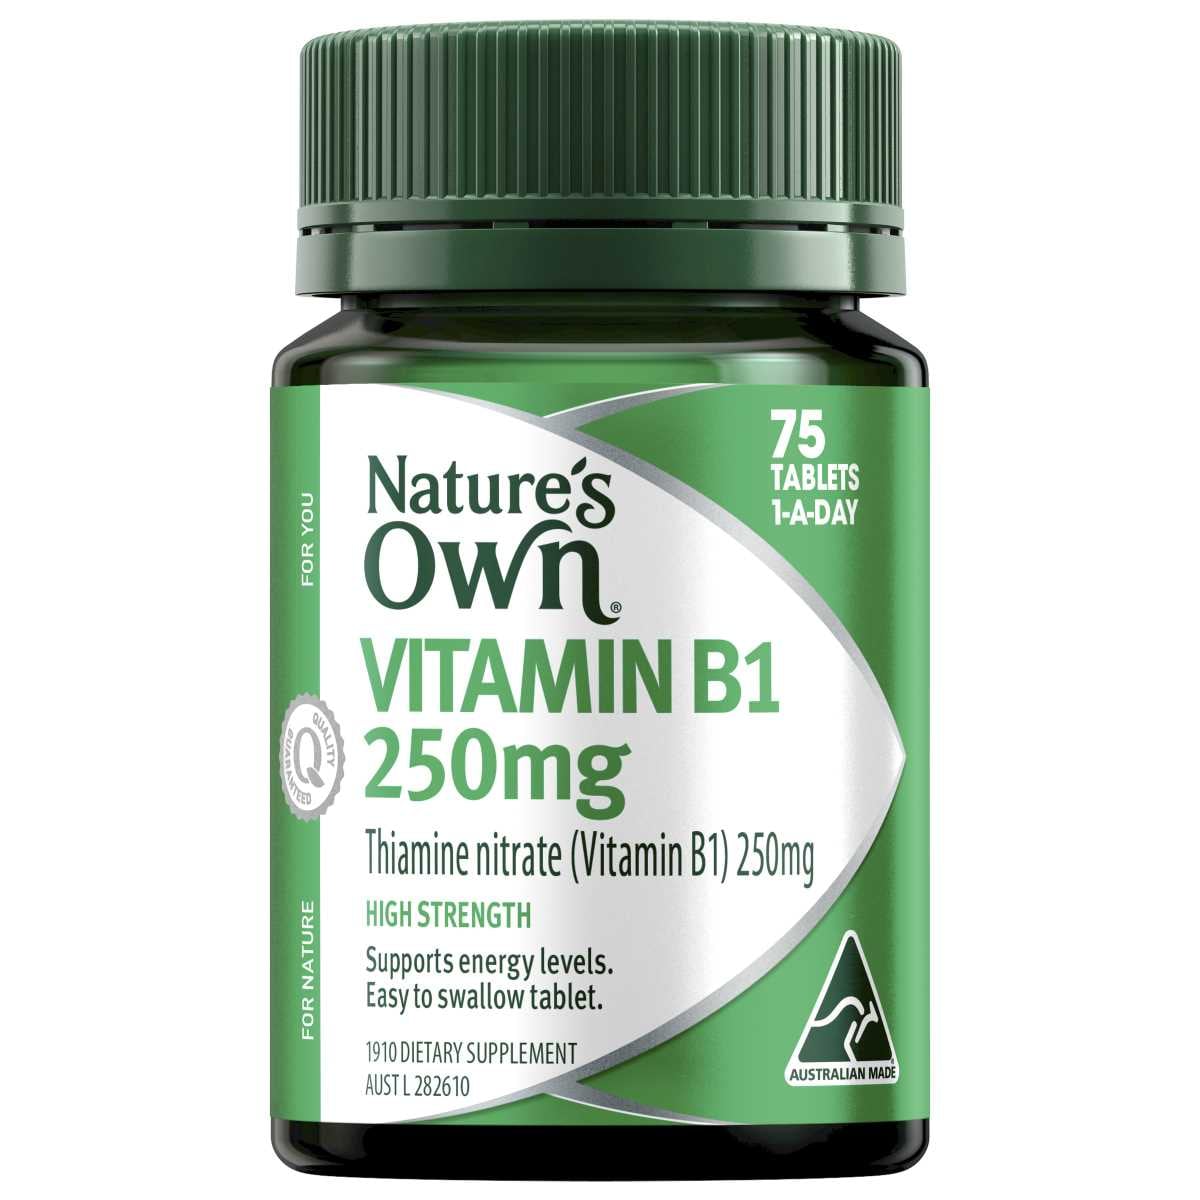 Natures Own Vitamin B1 250mg 75 Tablets Australia